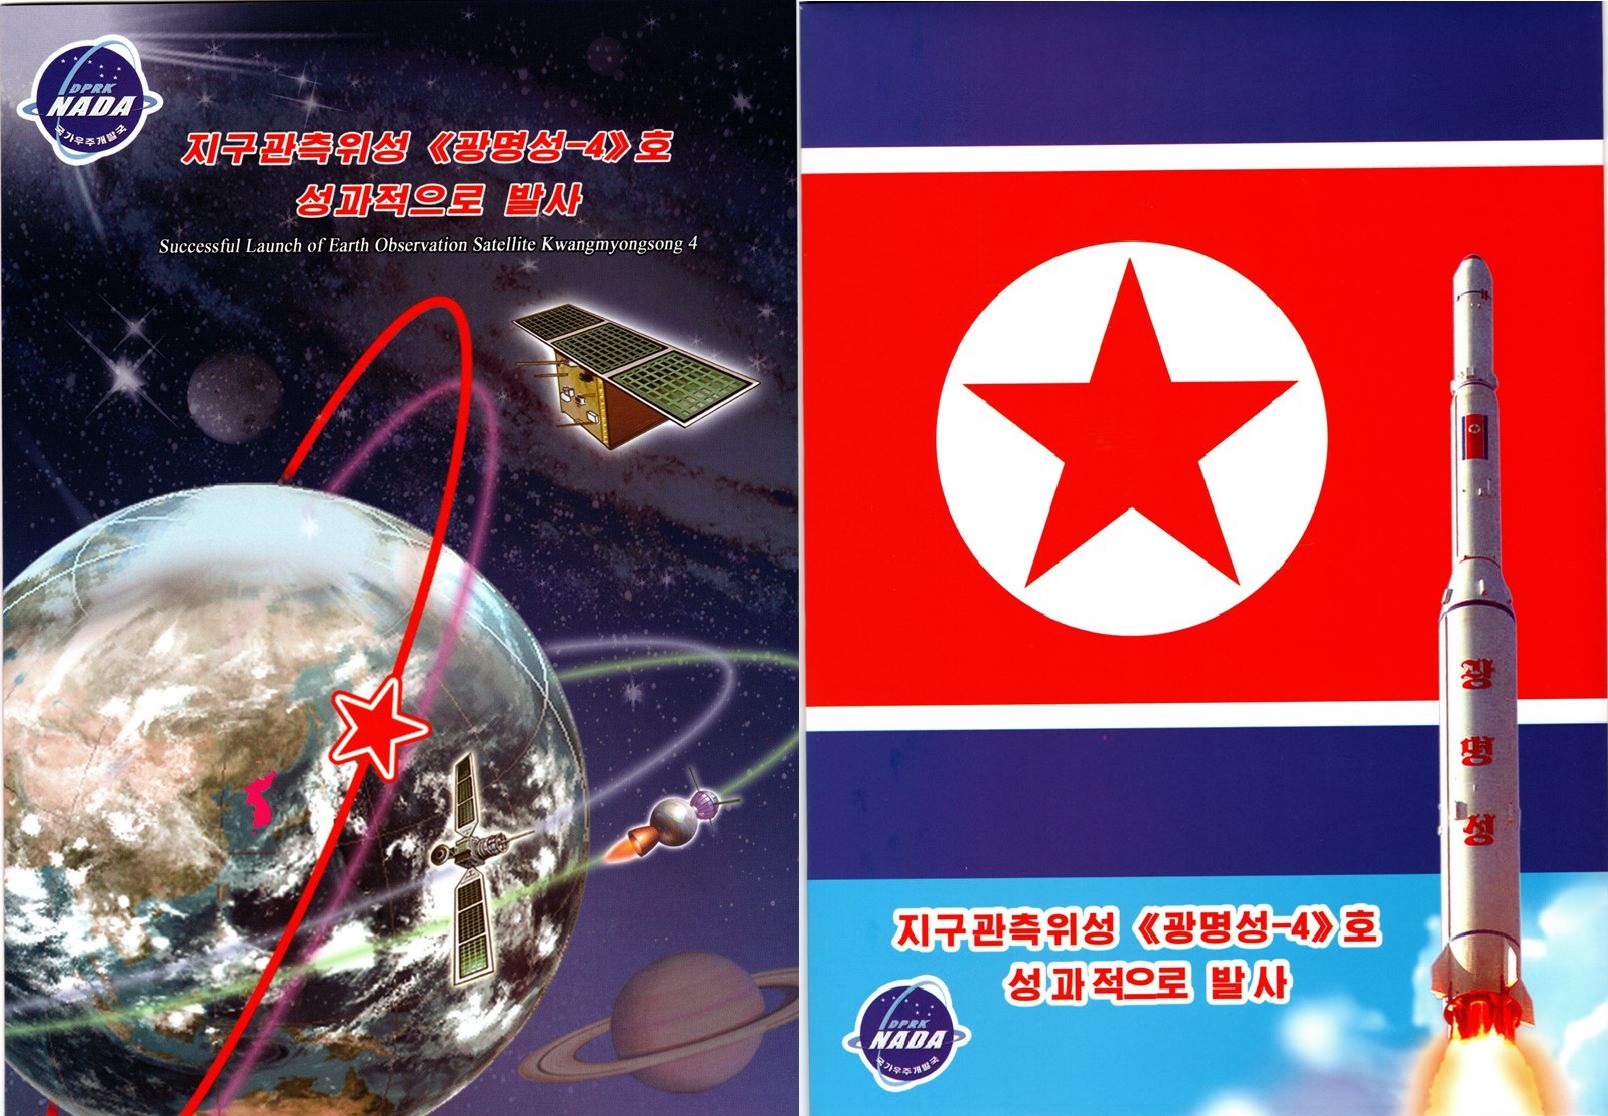 L4201, Korea Stamp Booklet "Satellite Kwangmyongsong 4", 2016